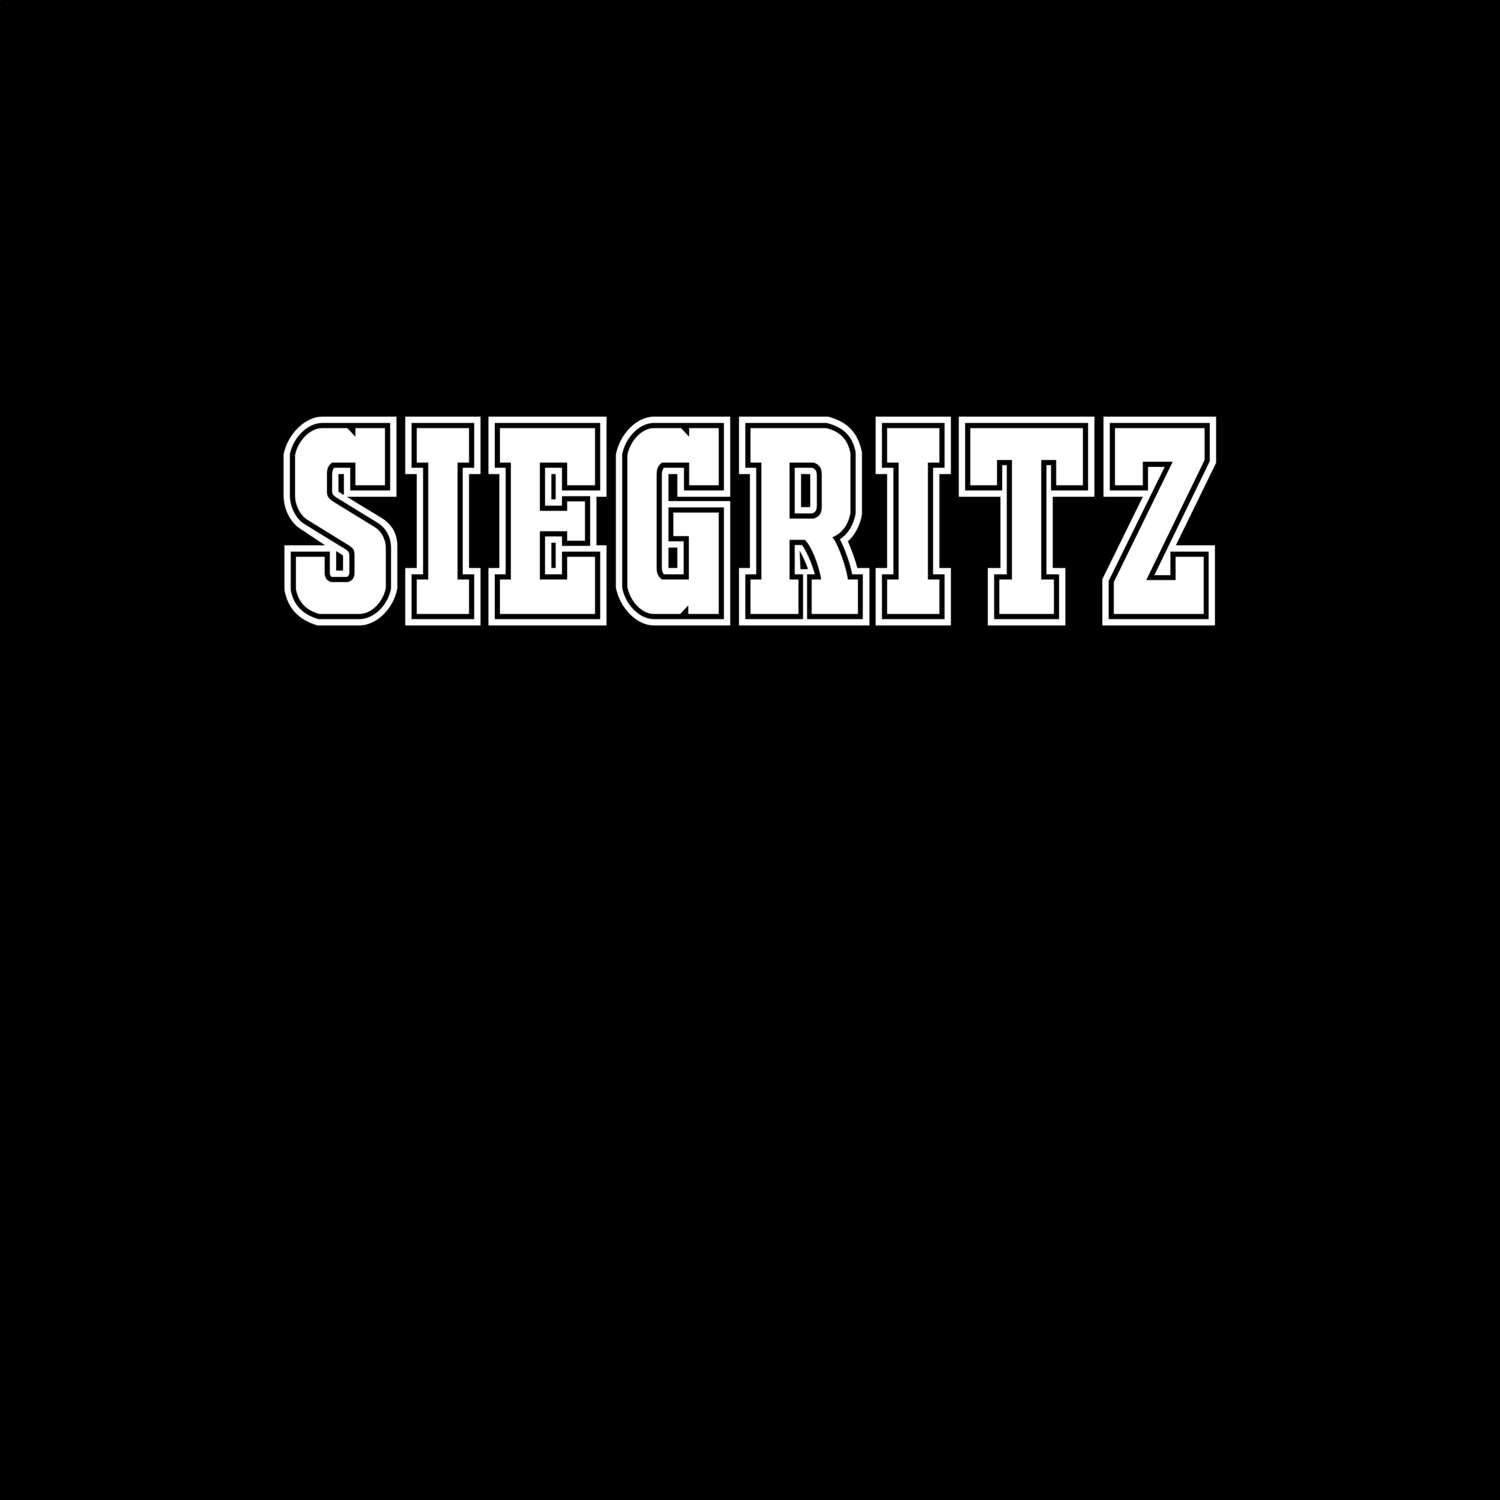 Siegritz T-Shirt »Classic«